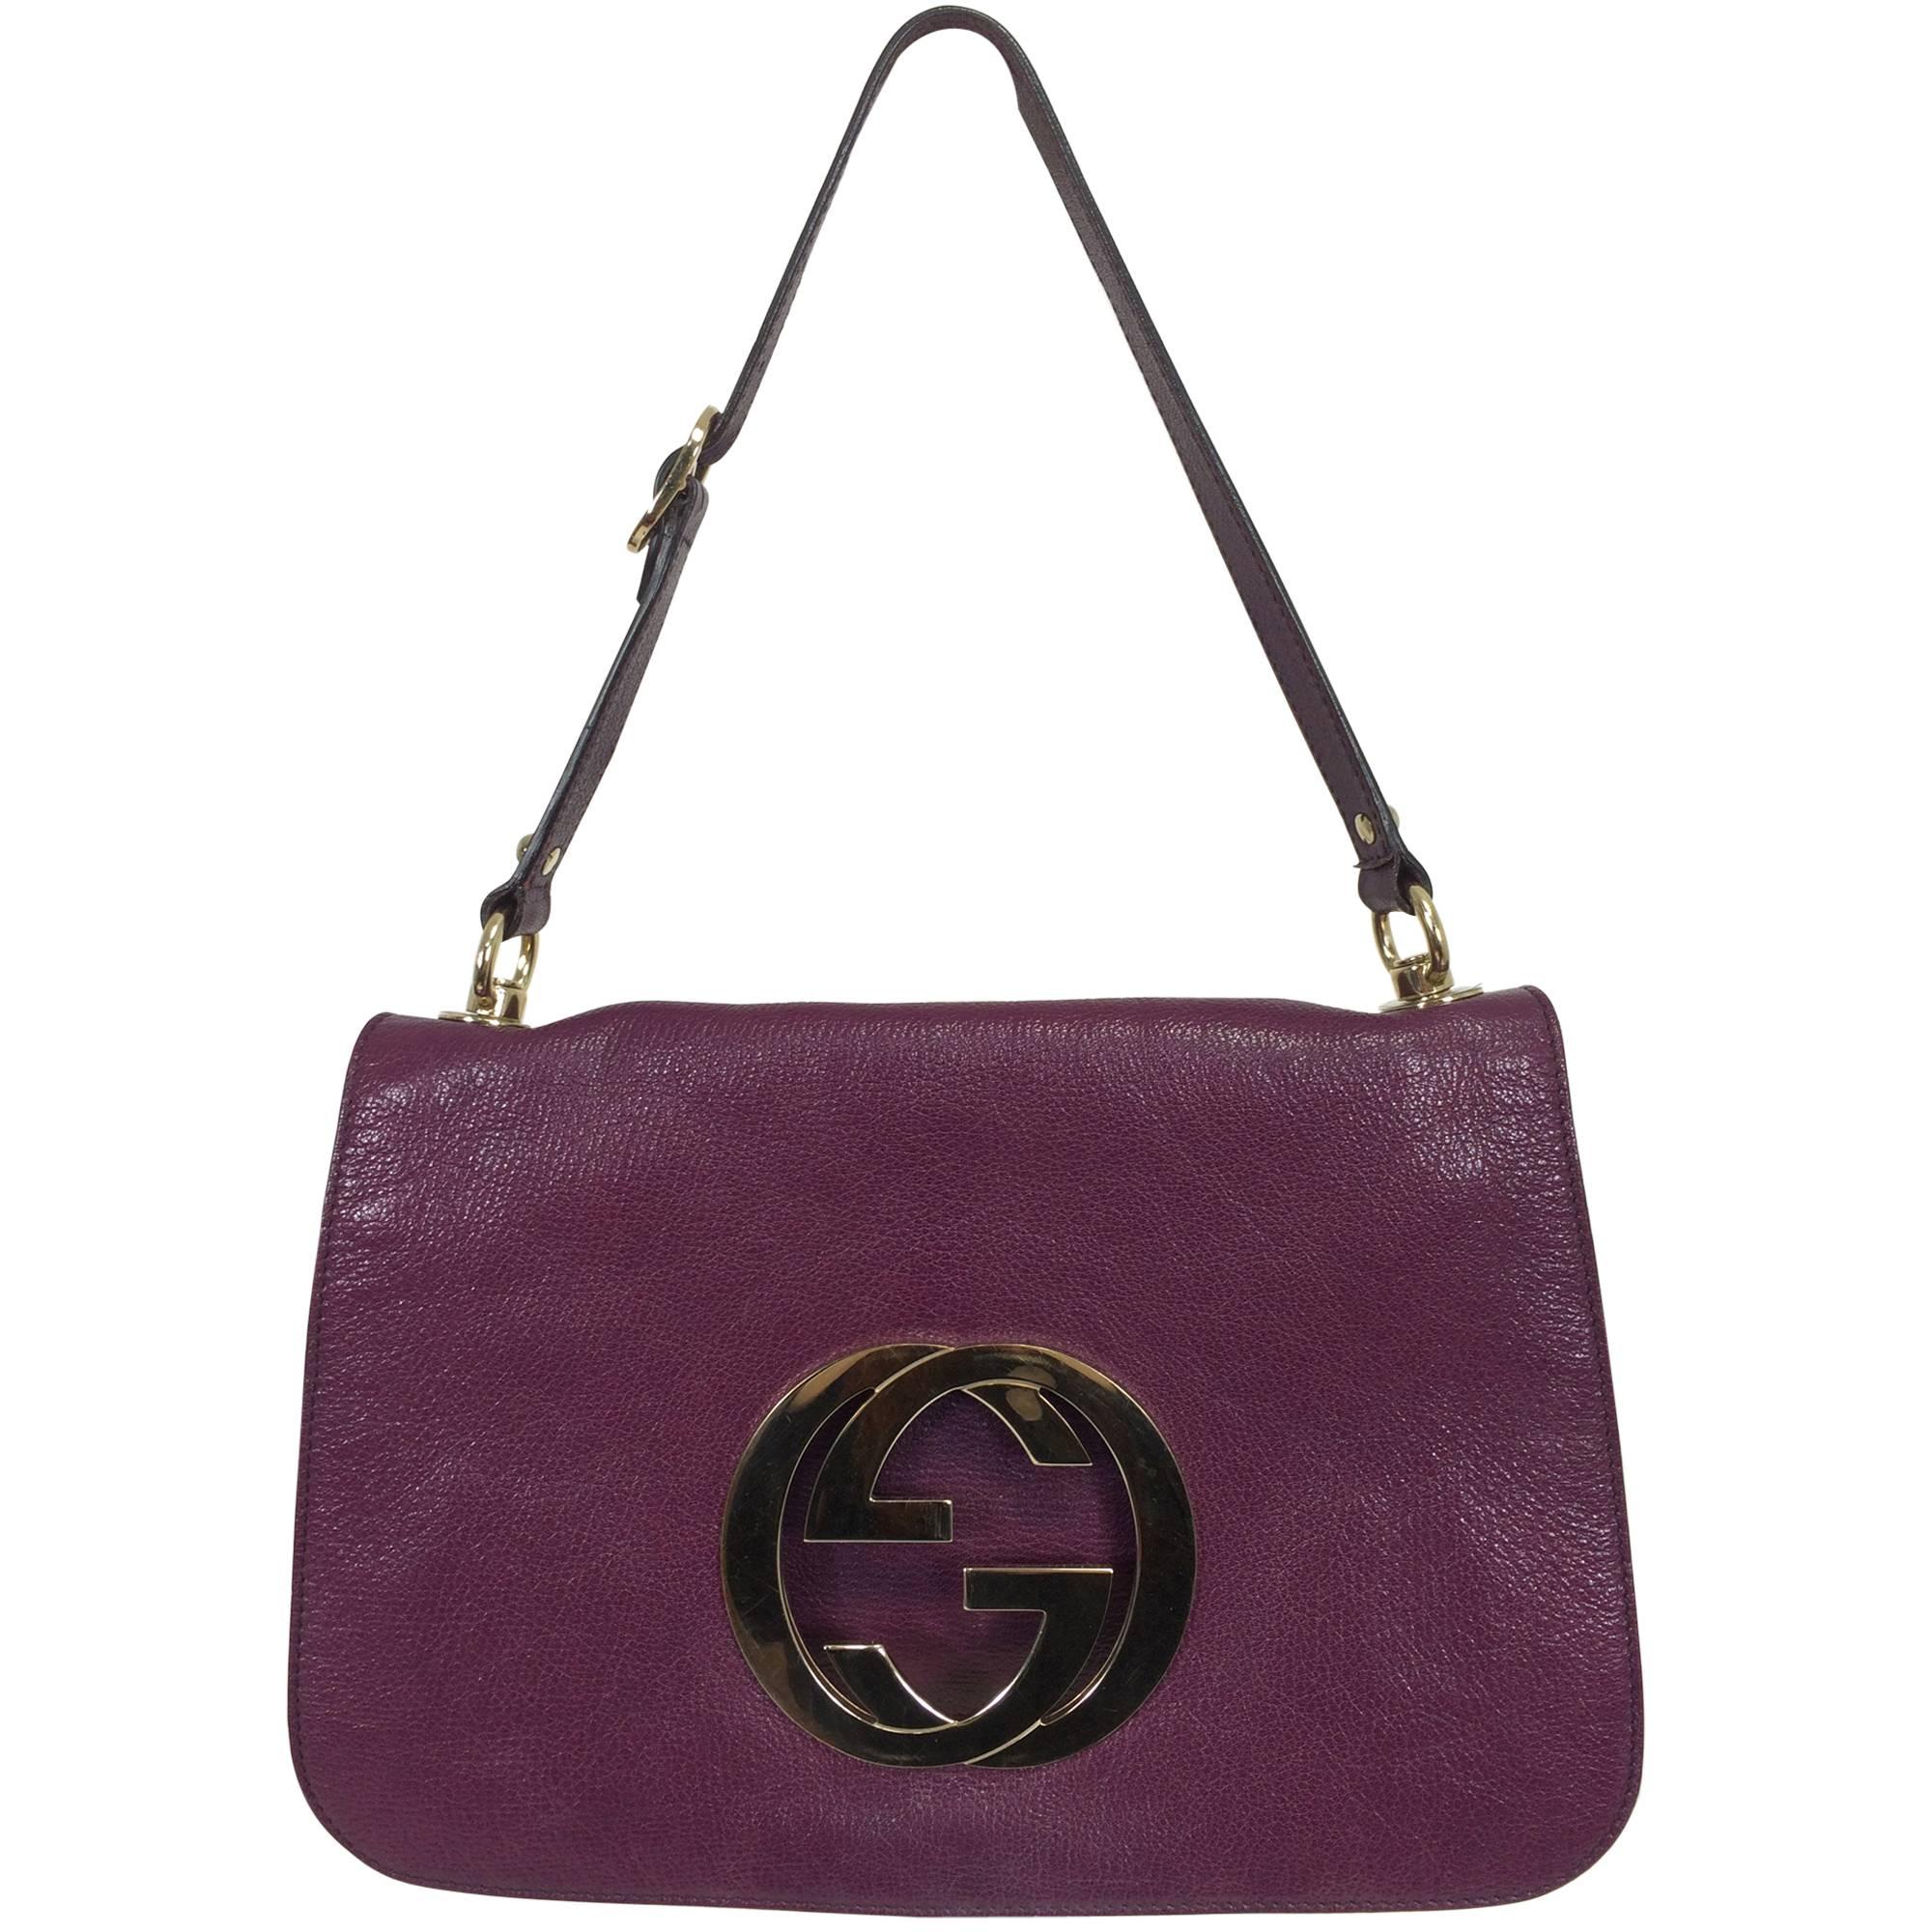 Gucci Blondie rare plum glazed leather shoulder handbag gold hardware